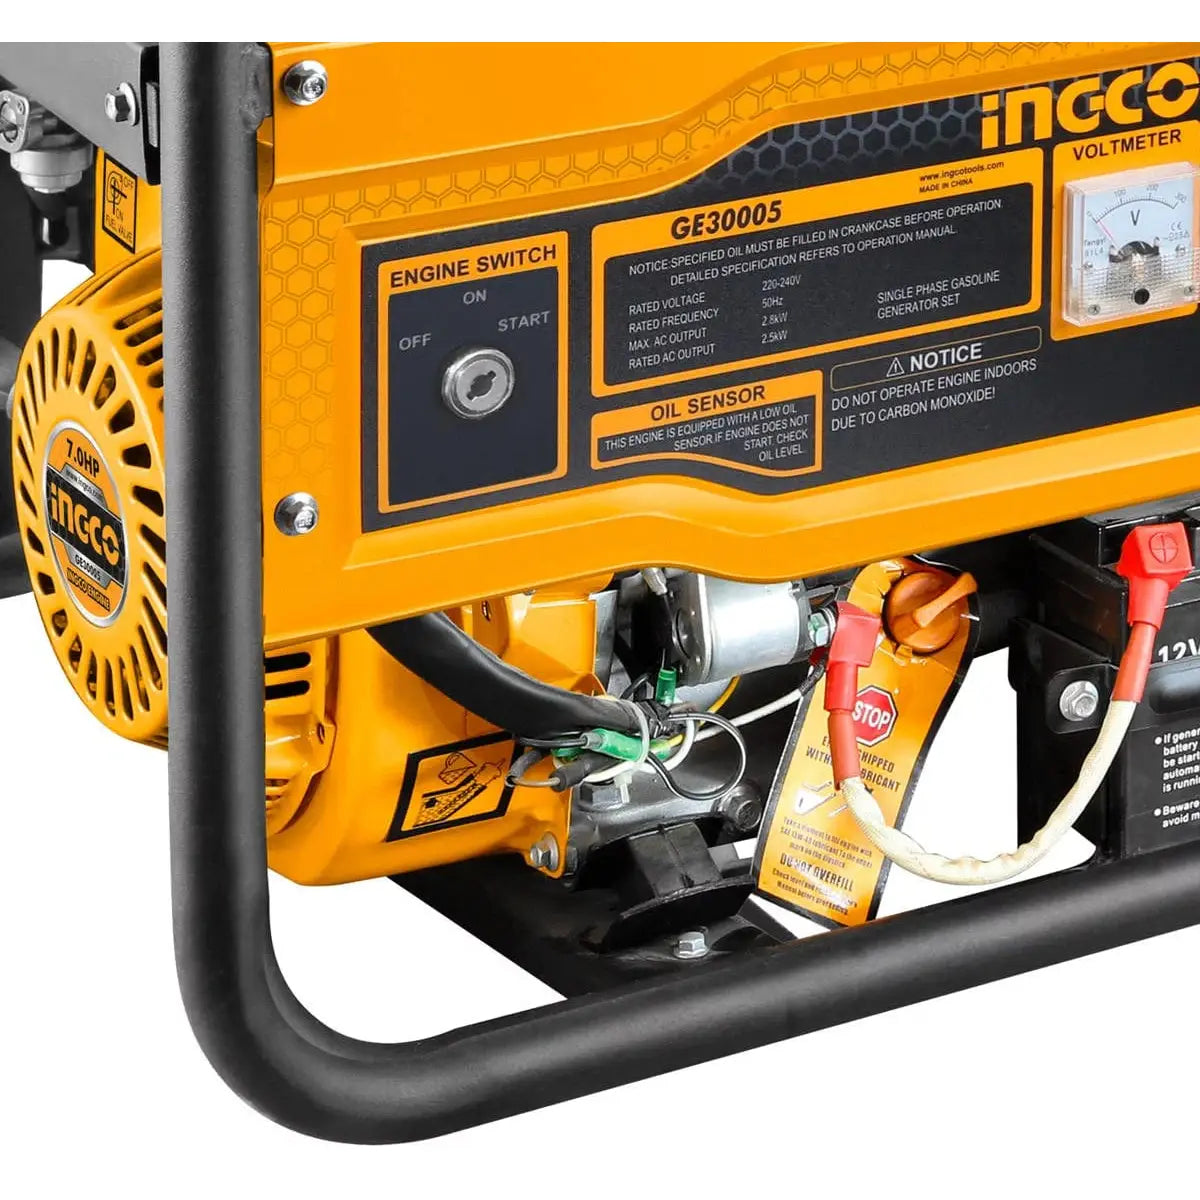 Ingco Gasoline Generator 2.8KW - GE30005 | Supply Master | Accra, Ghana Generator Buy Tools hardware Building materials